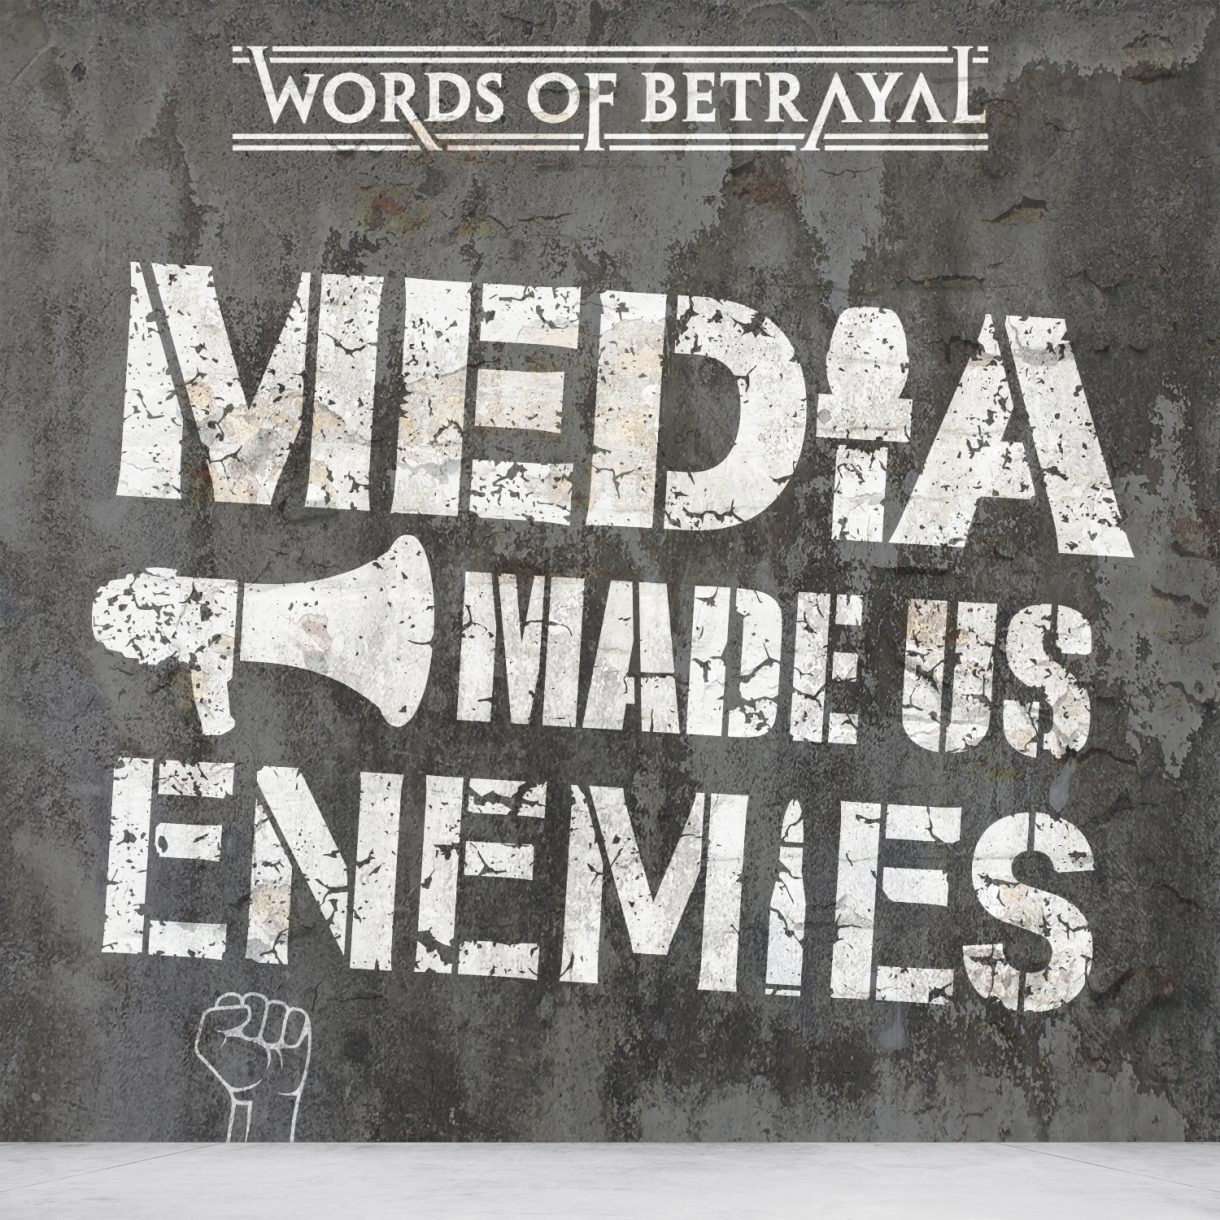 Words of betrayal - Media made us enemies - album cover(medium res)